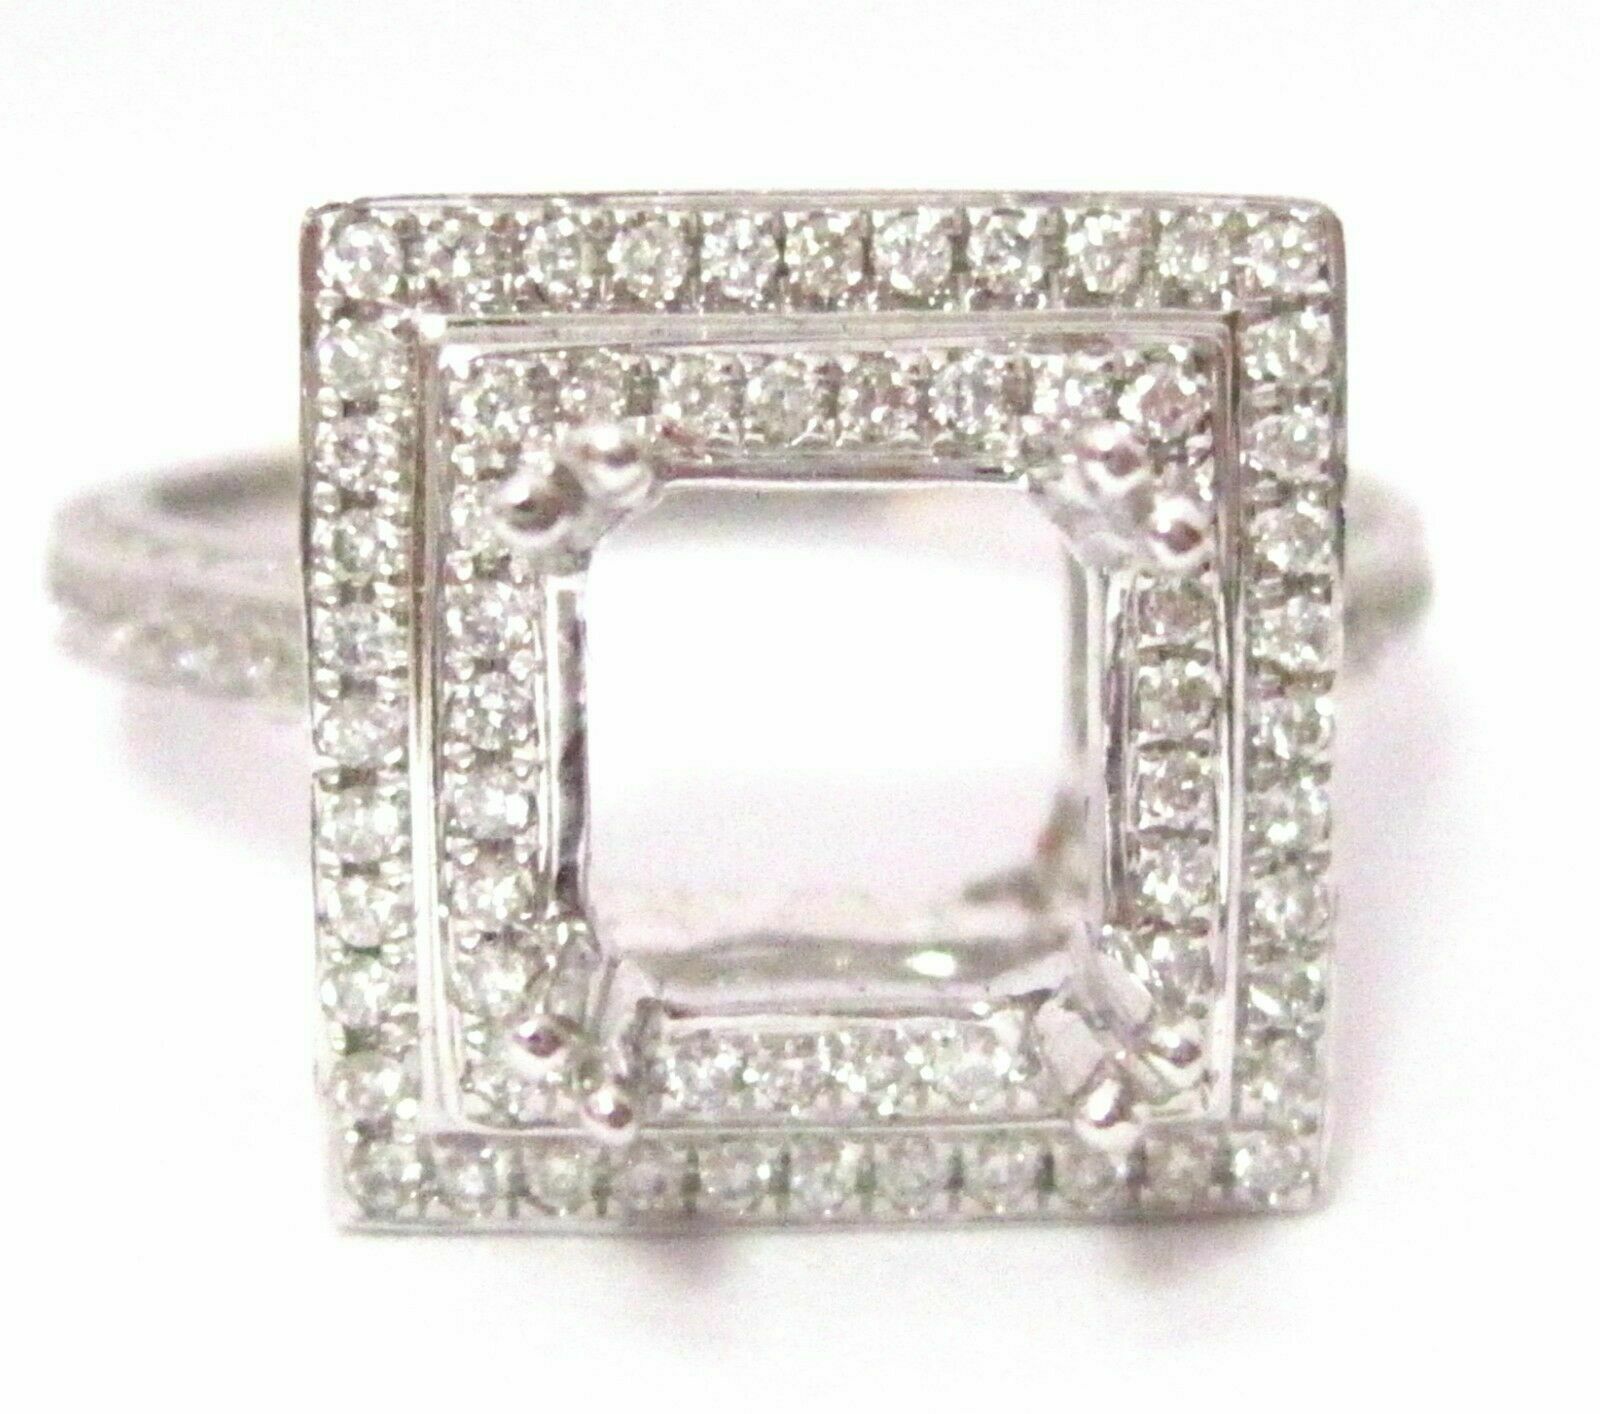 4 Prongs Semi-Mounting for PRINCESS or CUSHION Diamond Engagement Ring 18k W/G